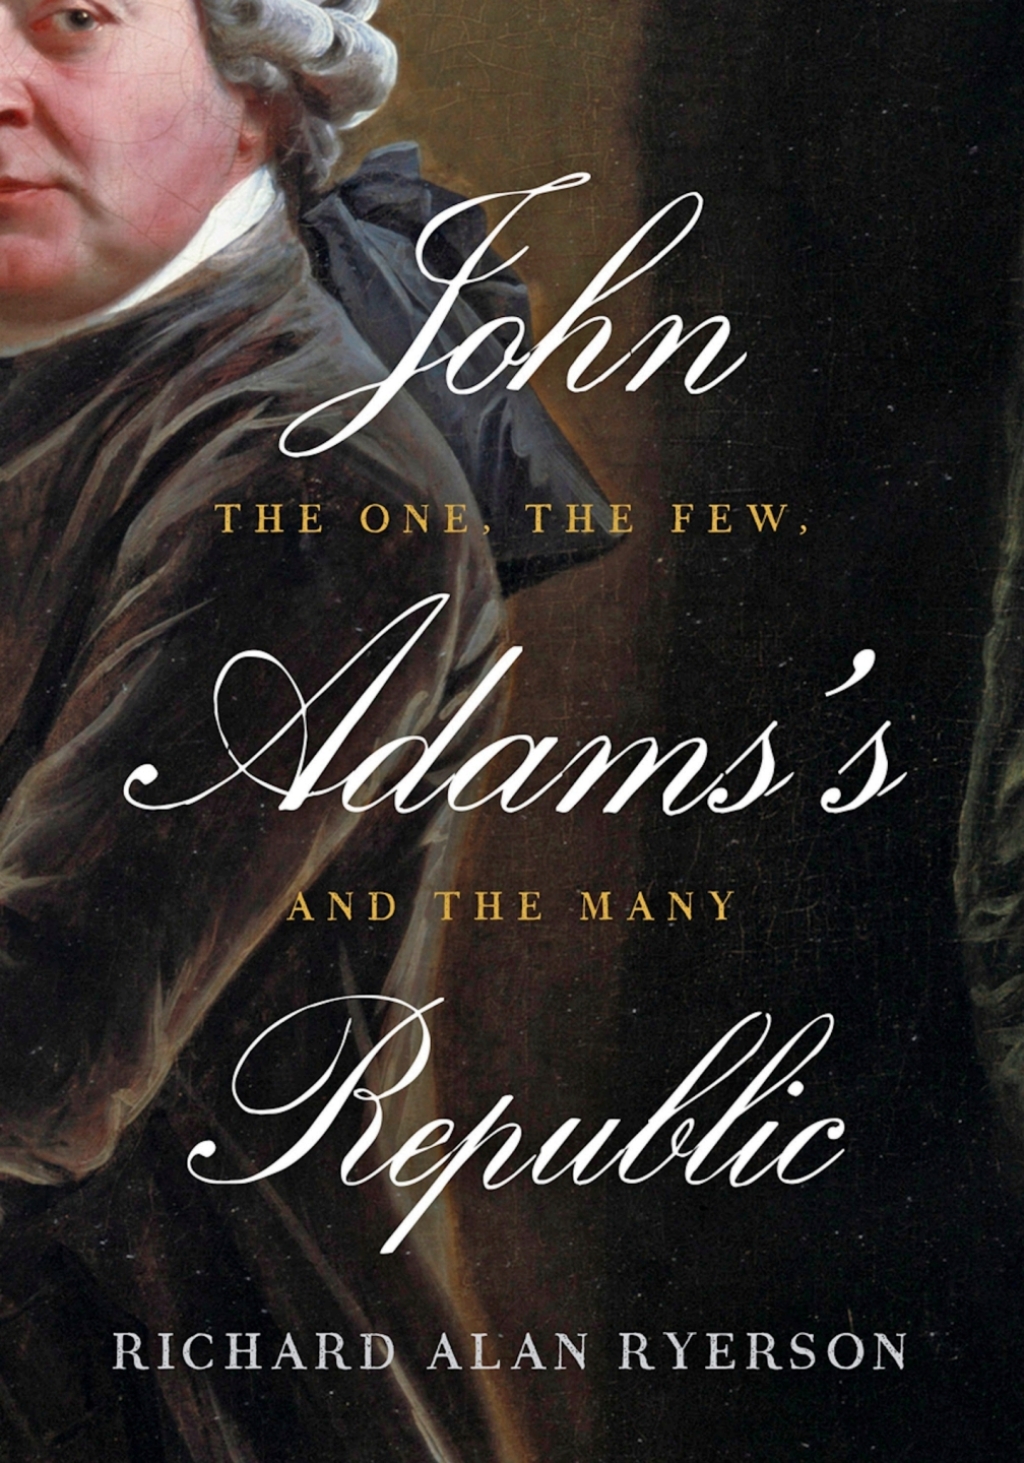 John Adams's Republic (eBook) - Richard Alan Ryerson,